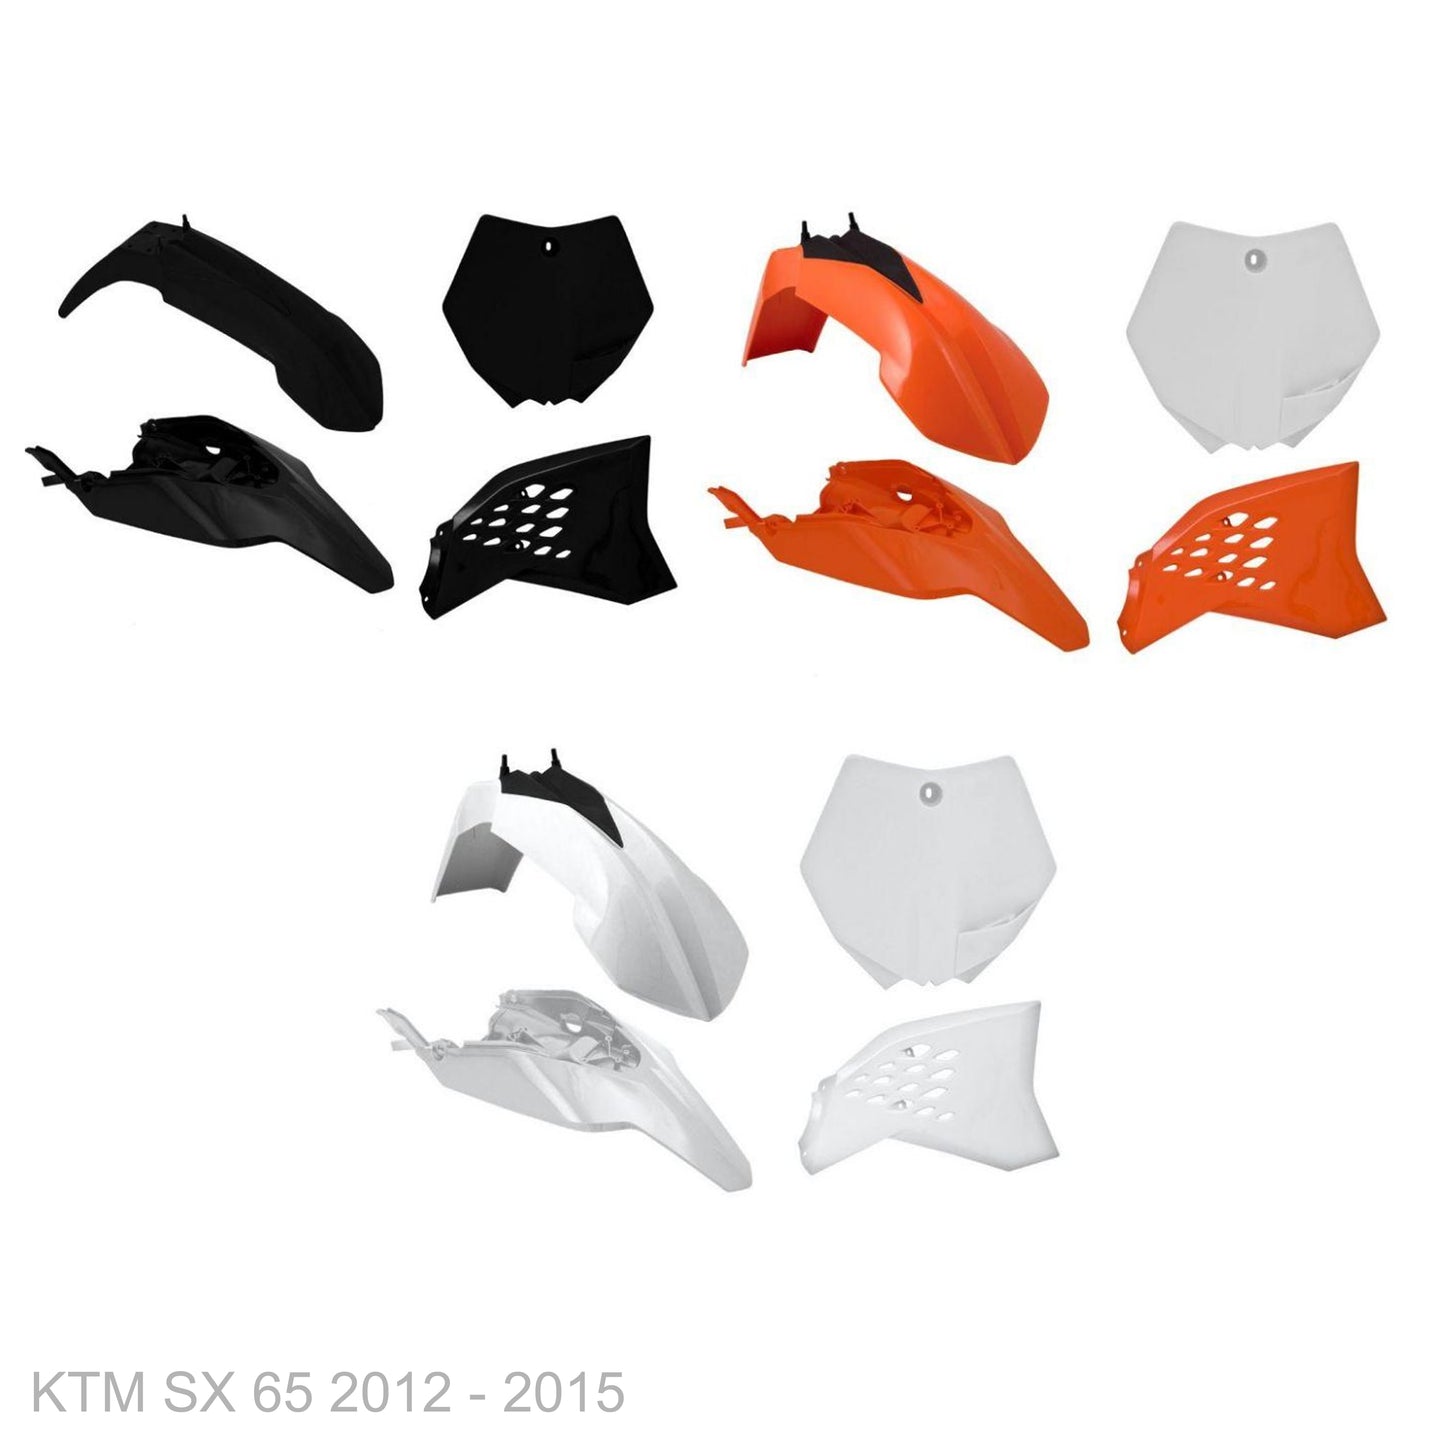 KTM SX 65 2012 - 2015 Start From Scratch Graphics Kits